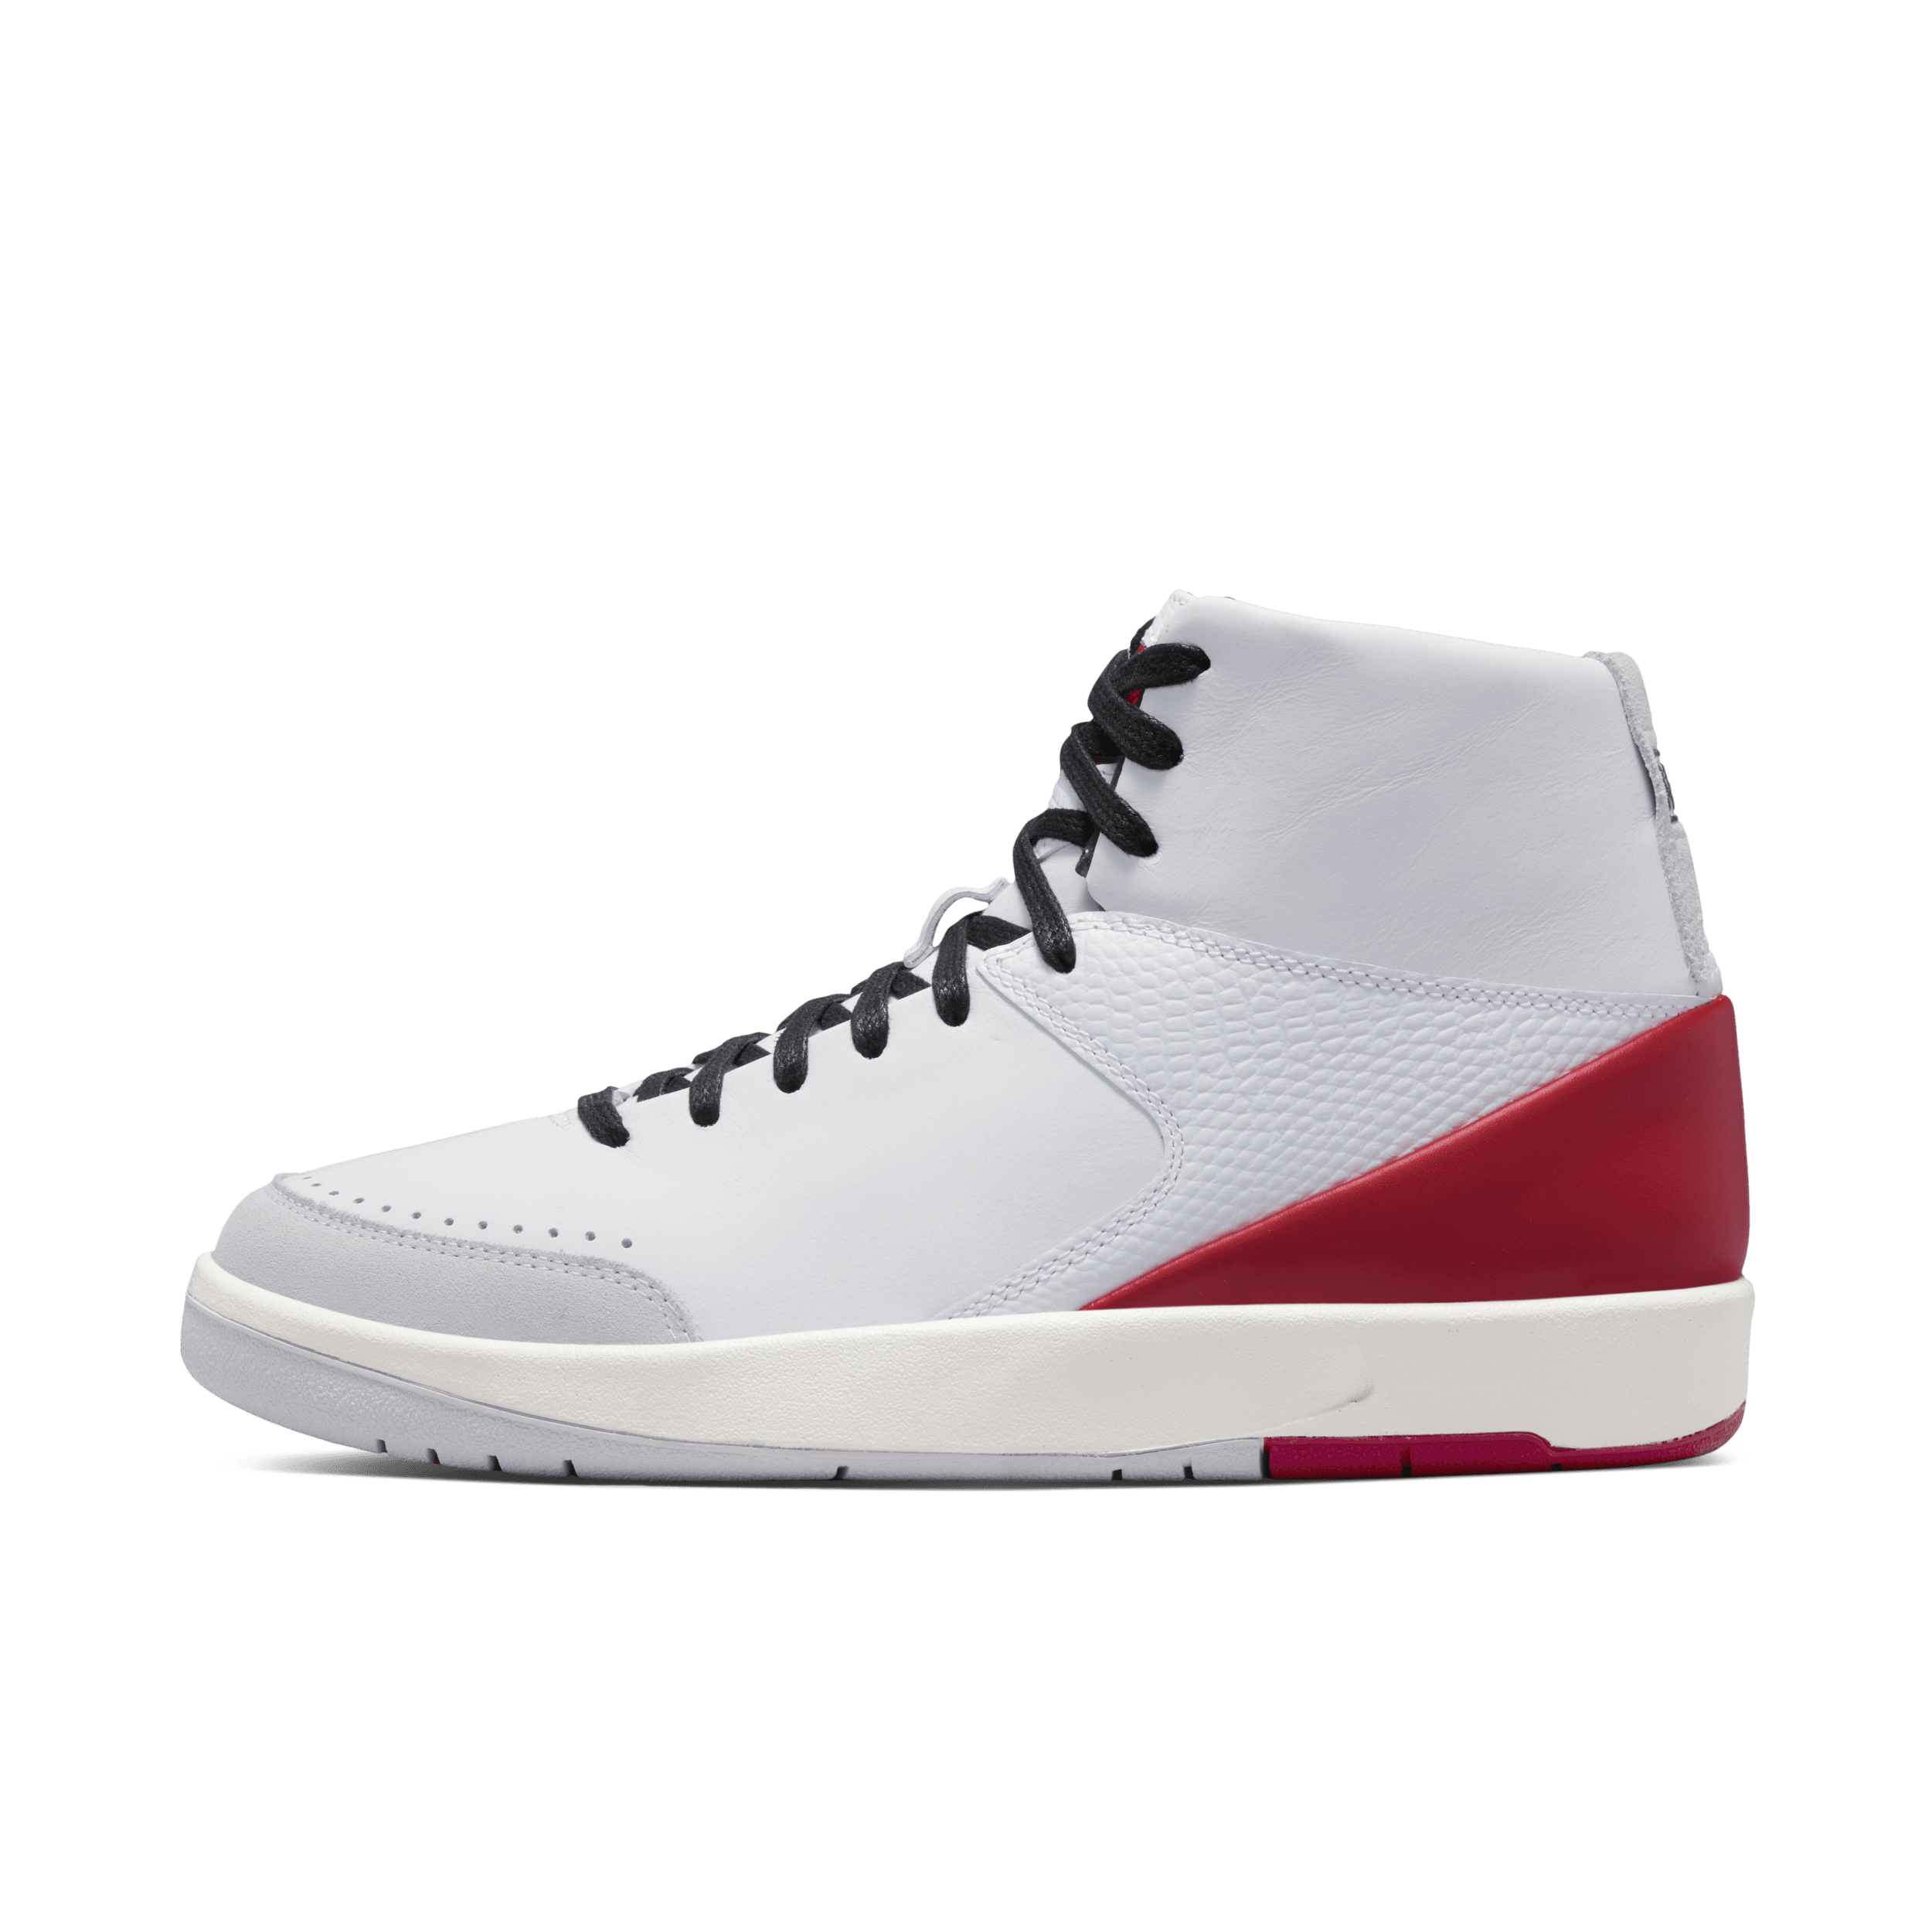 Air Jordan 2 Retro SE-sko til kvinder - hvid